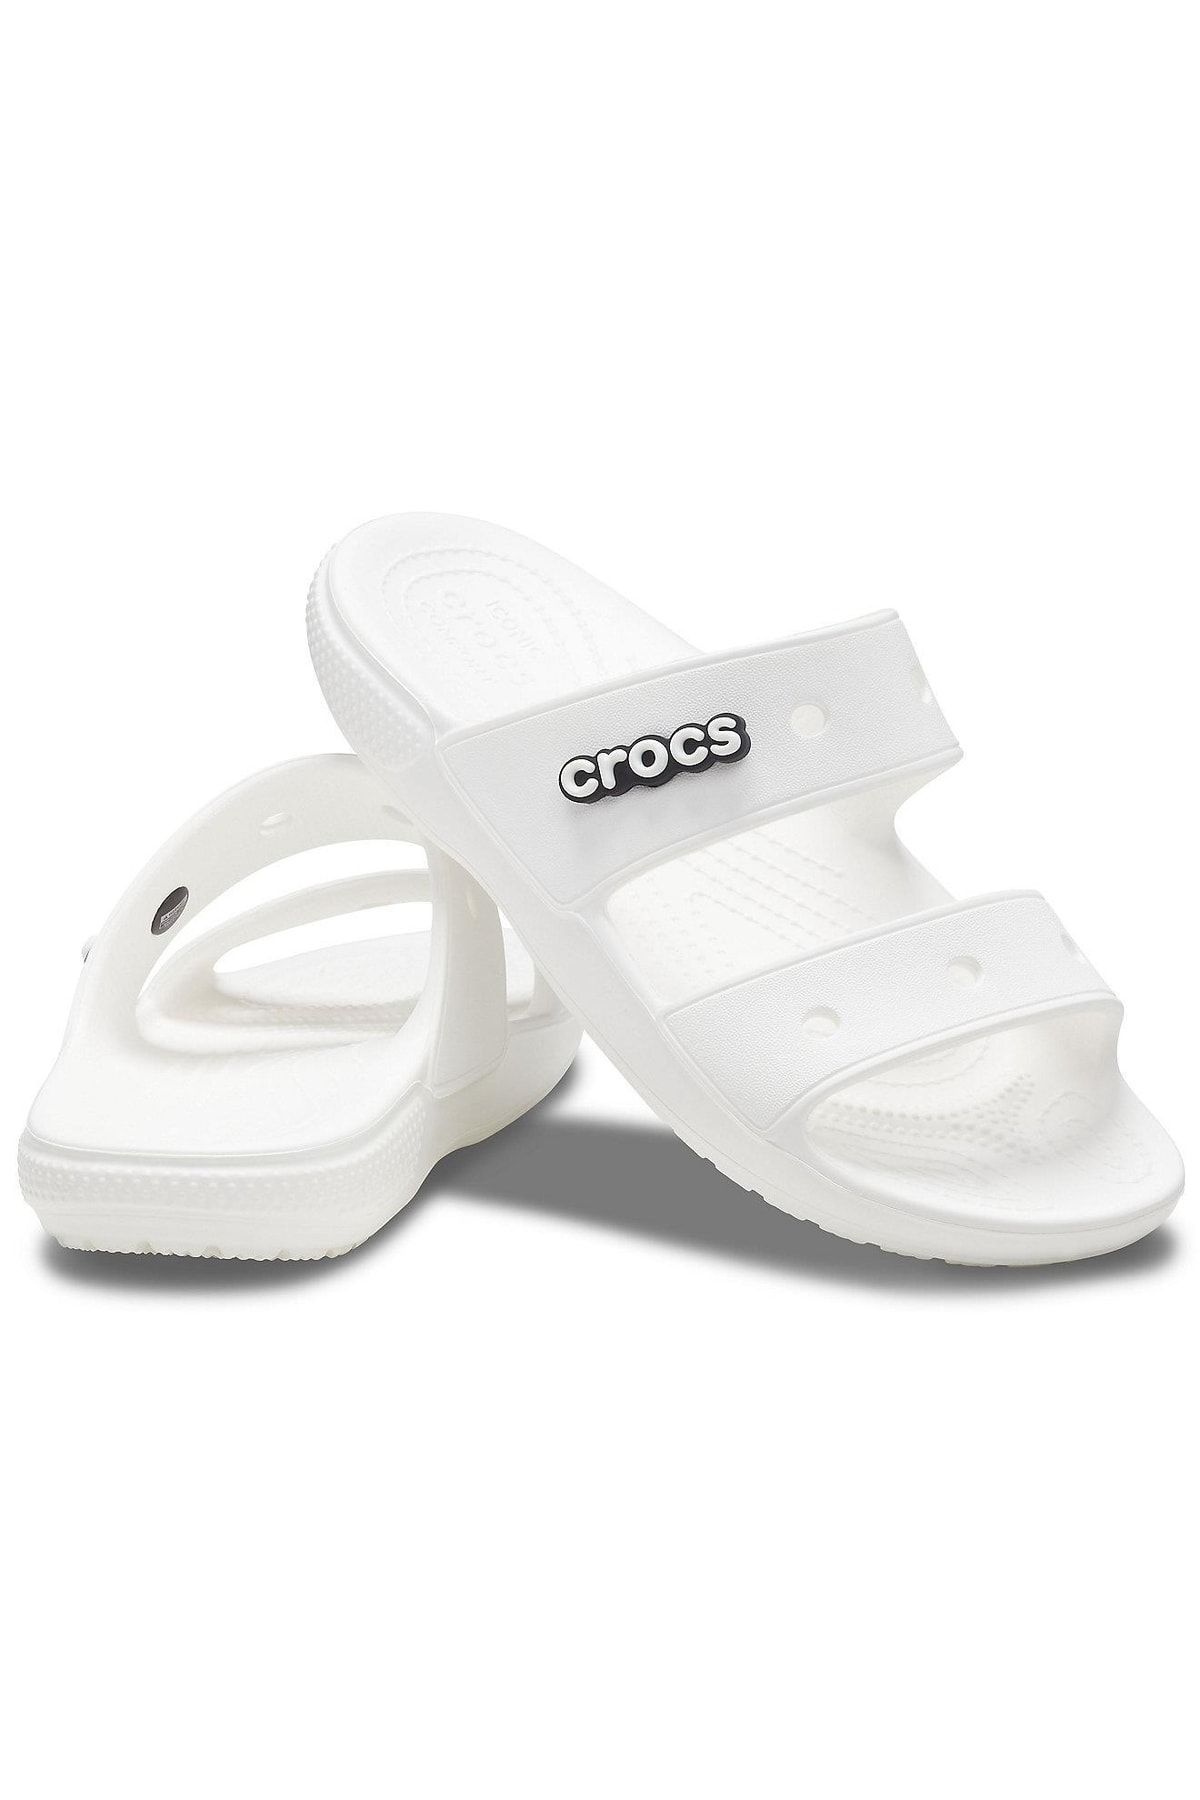 Crocs -unısex-classic Sandal-206761